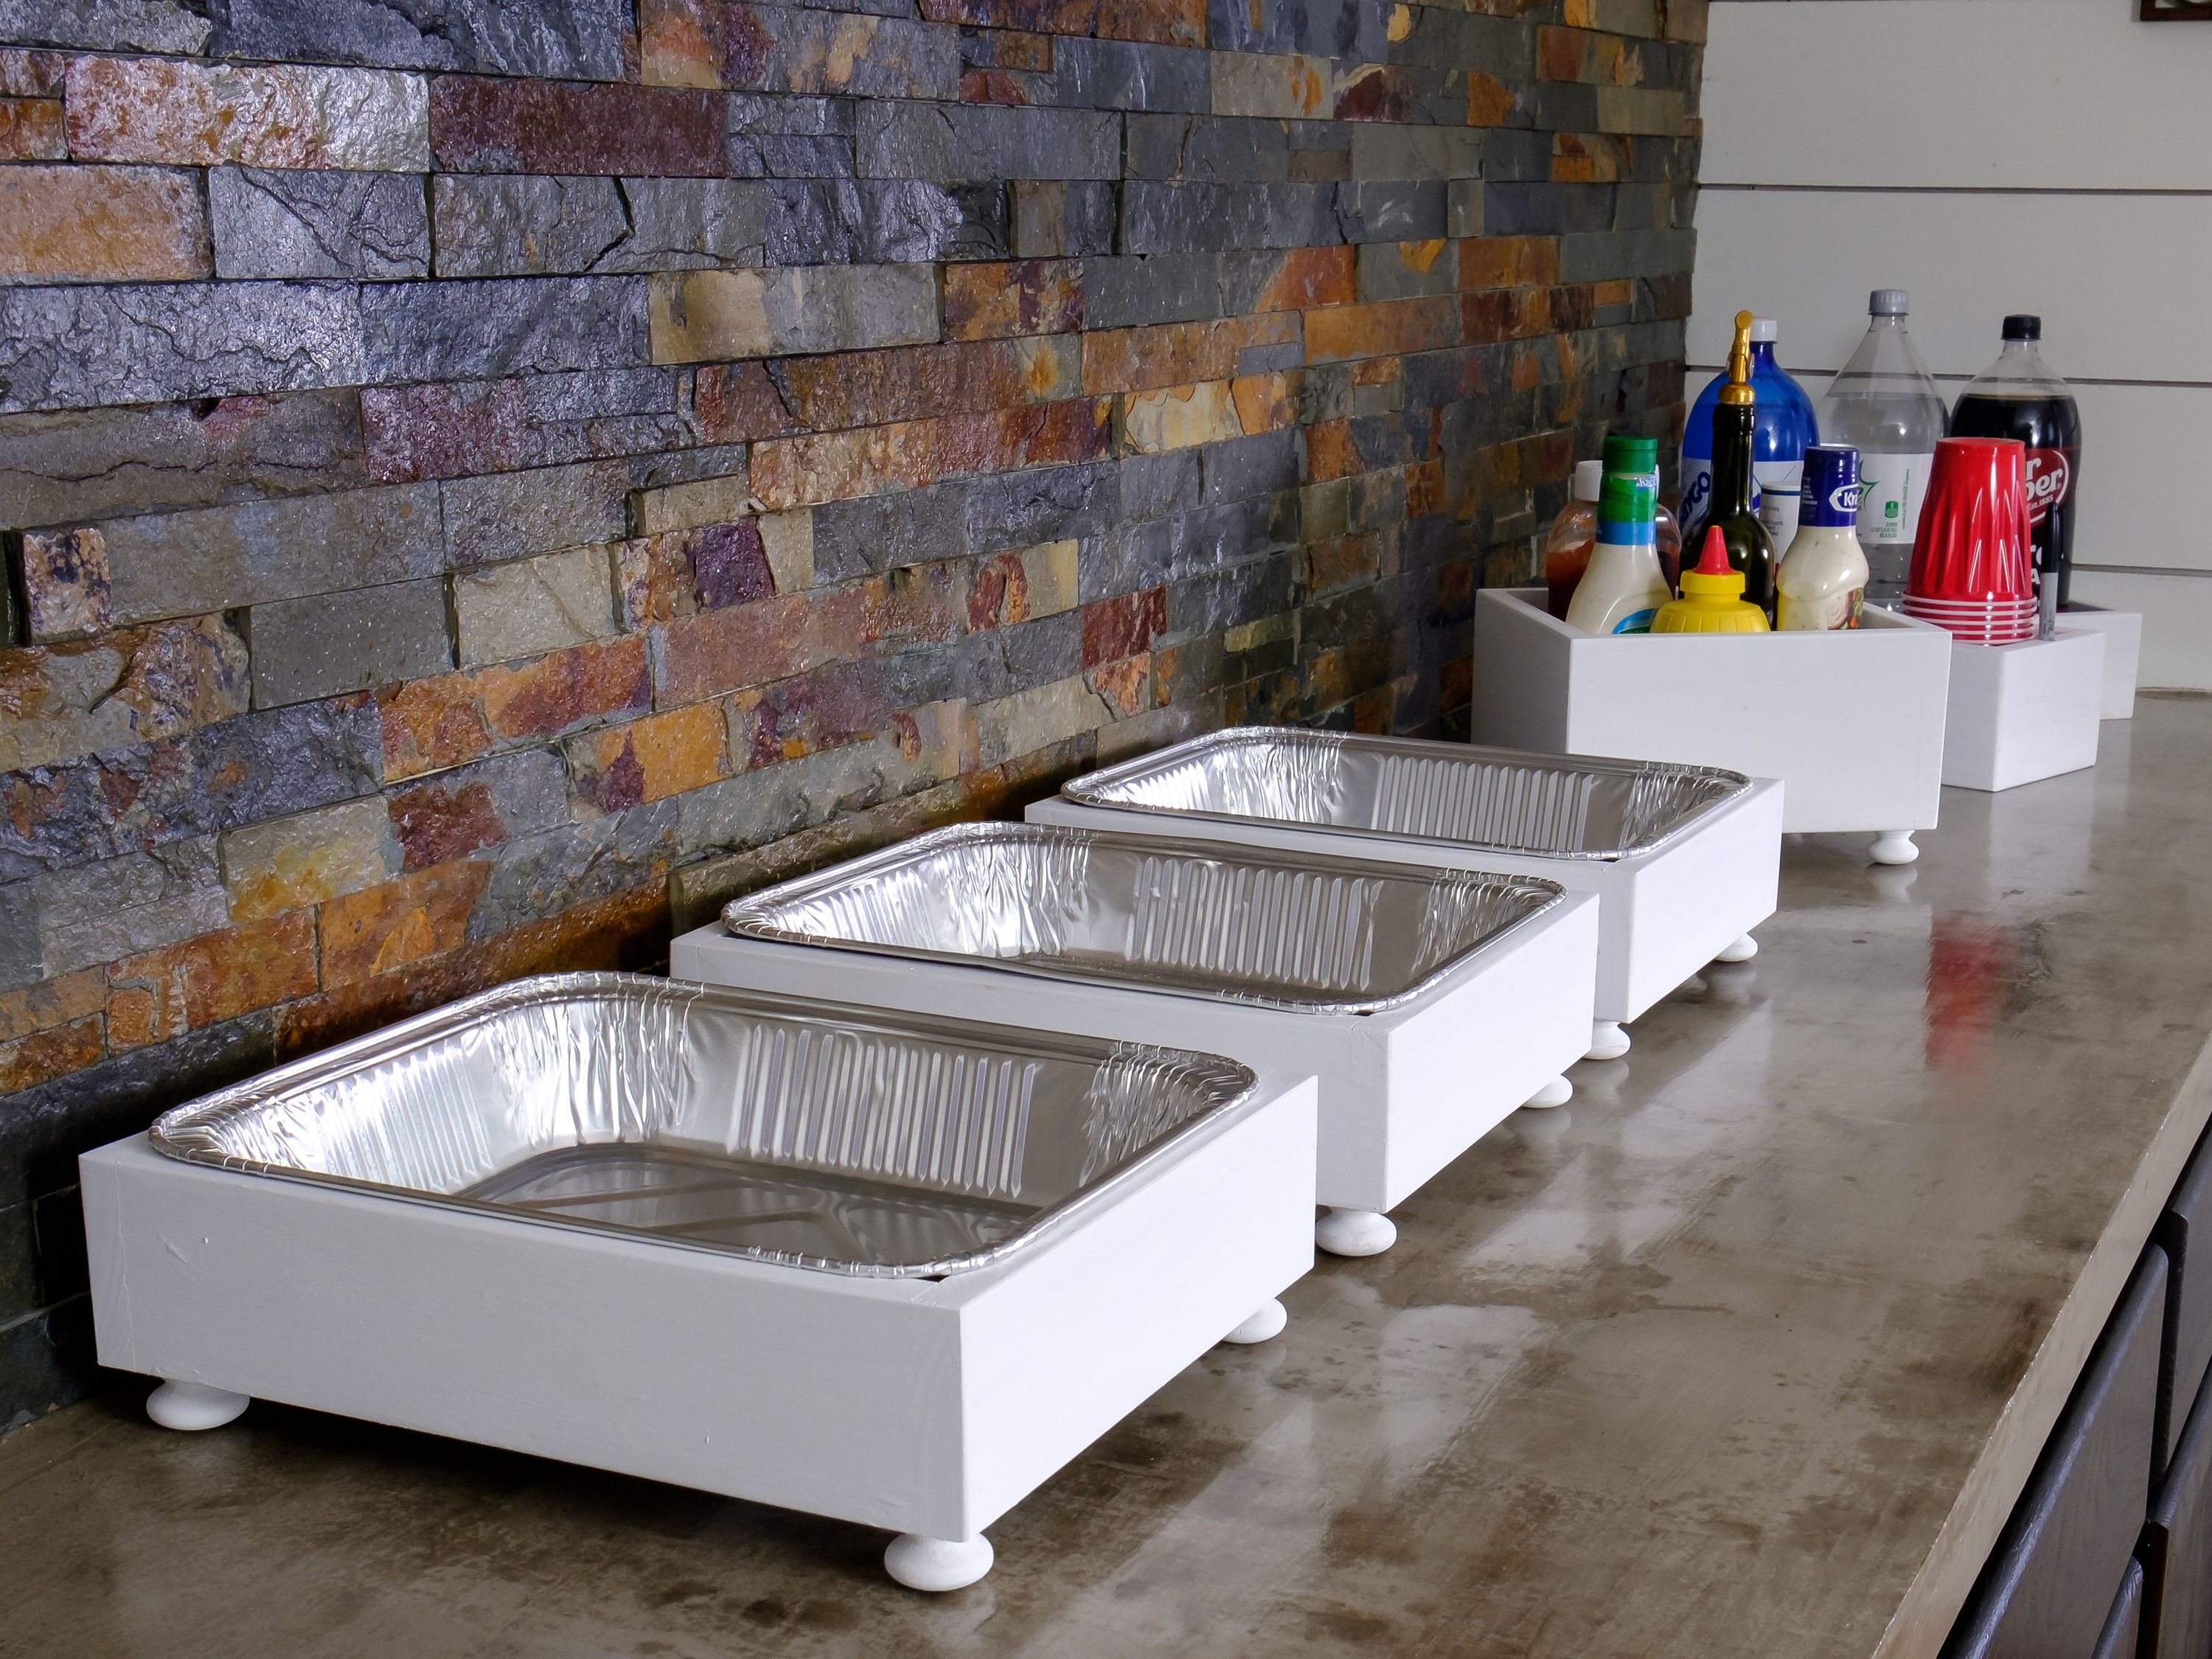 Foil Pan Holder – Aluminum Baking Dish Carrier – Potluck Party